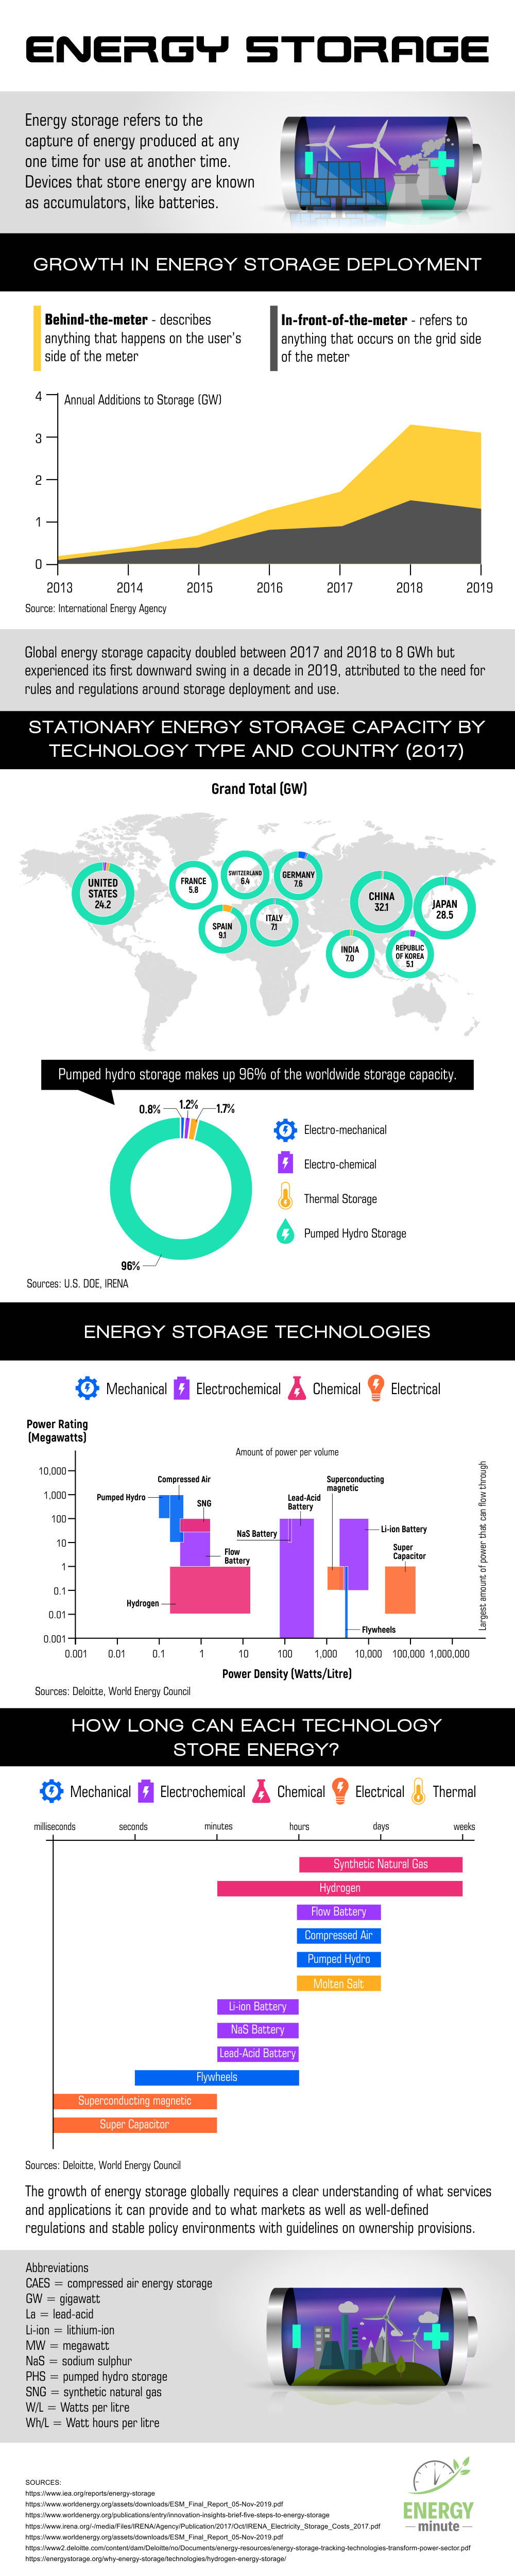 How Energy Storage is Used Around the World